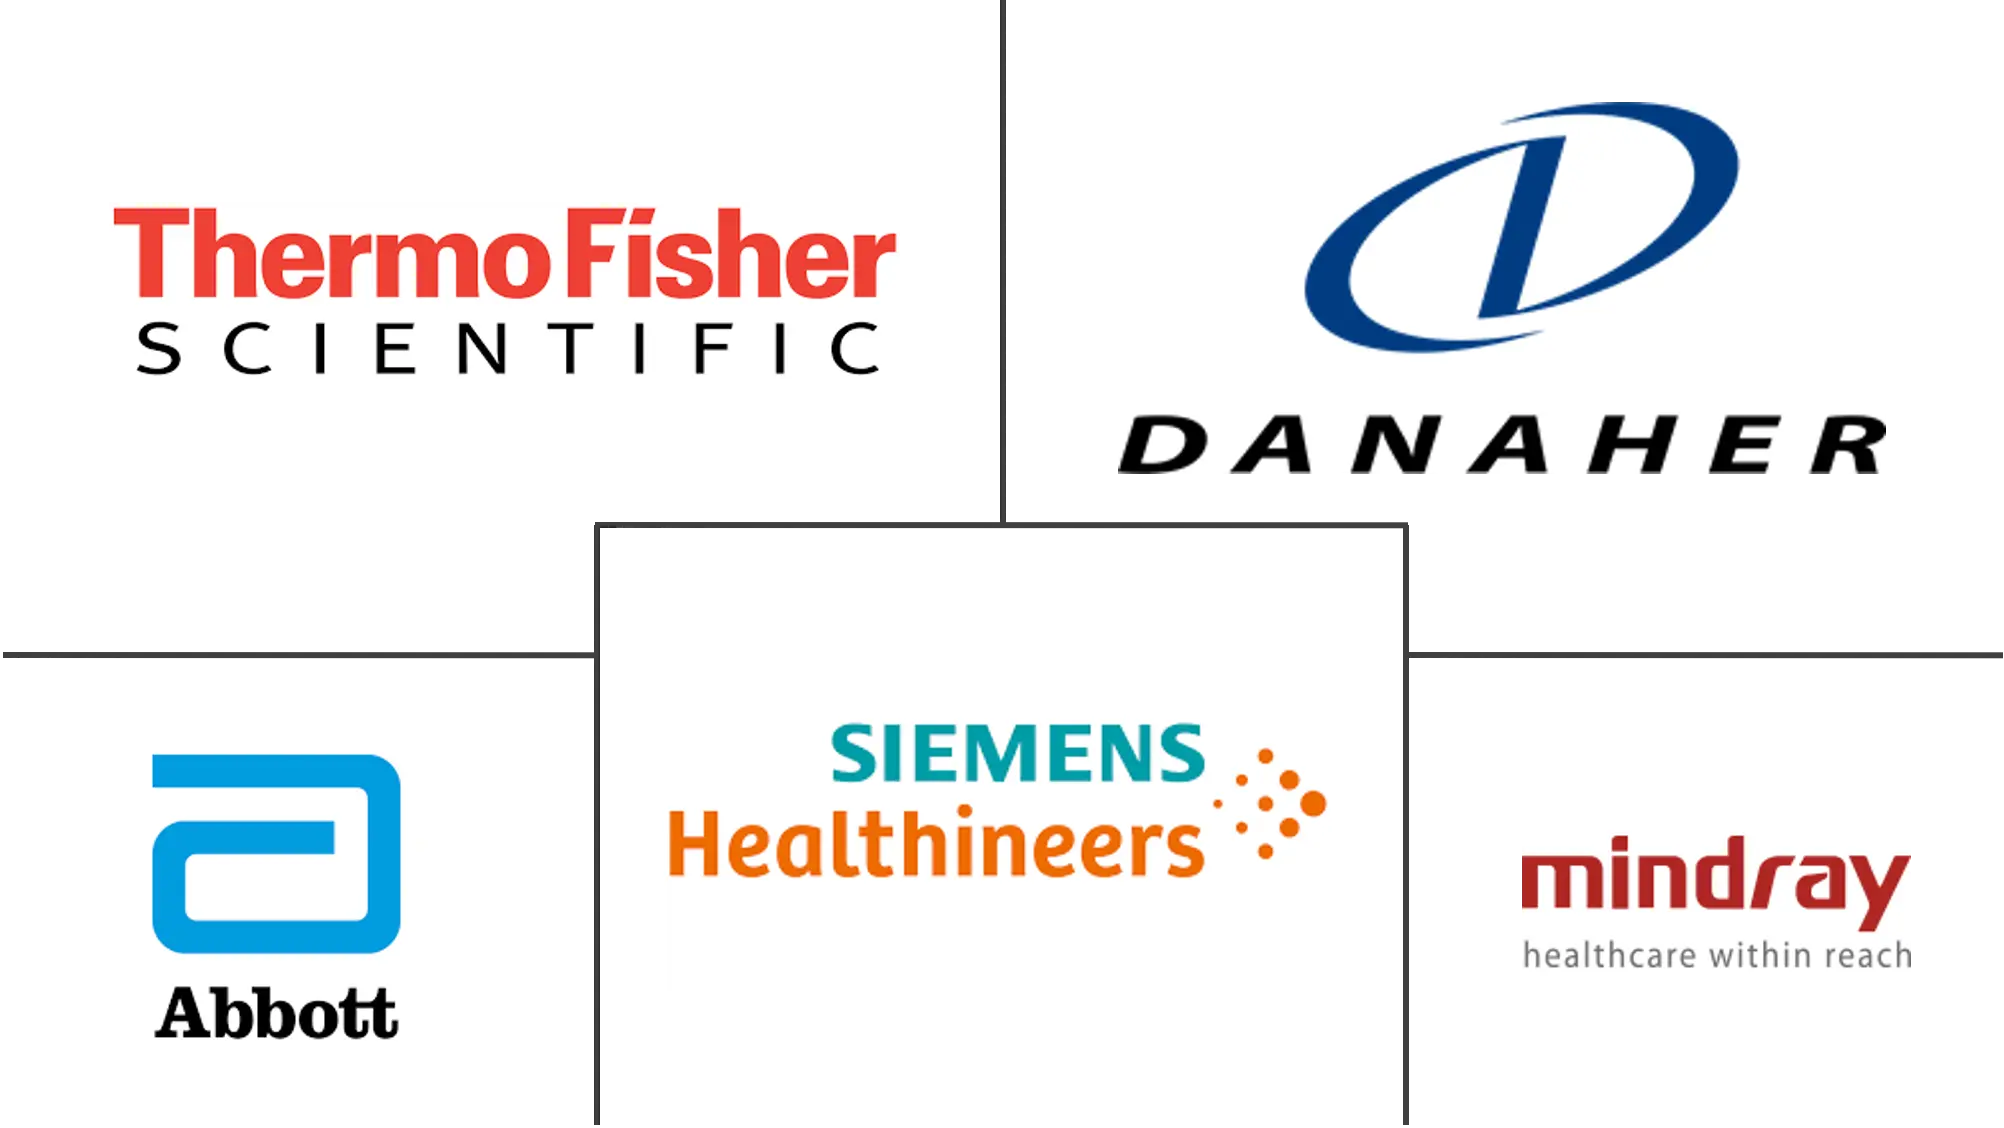  Clinical Chemistry Analyzers Market Major Players